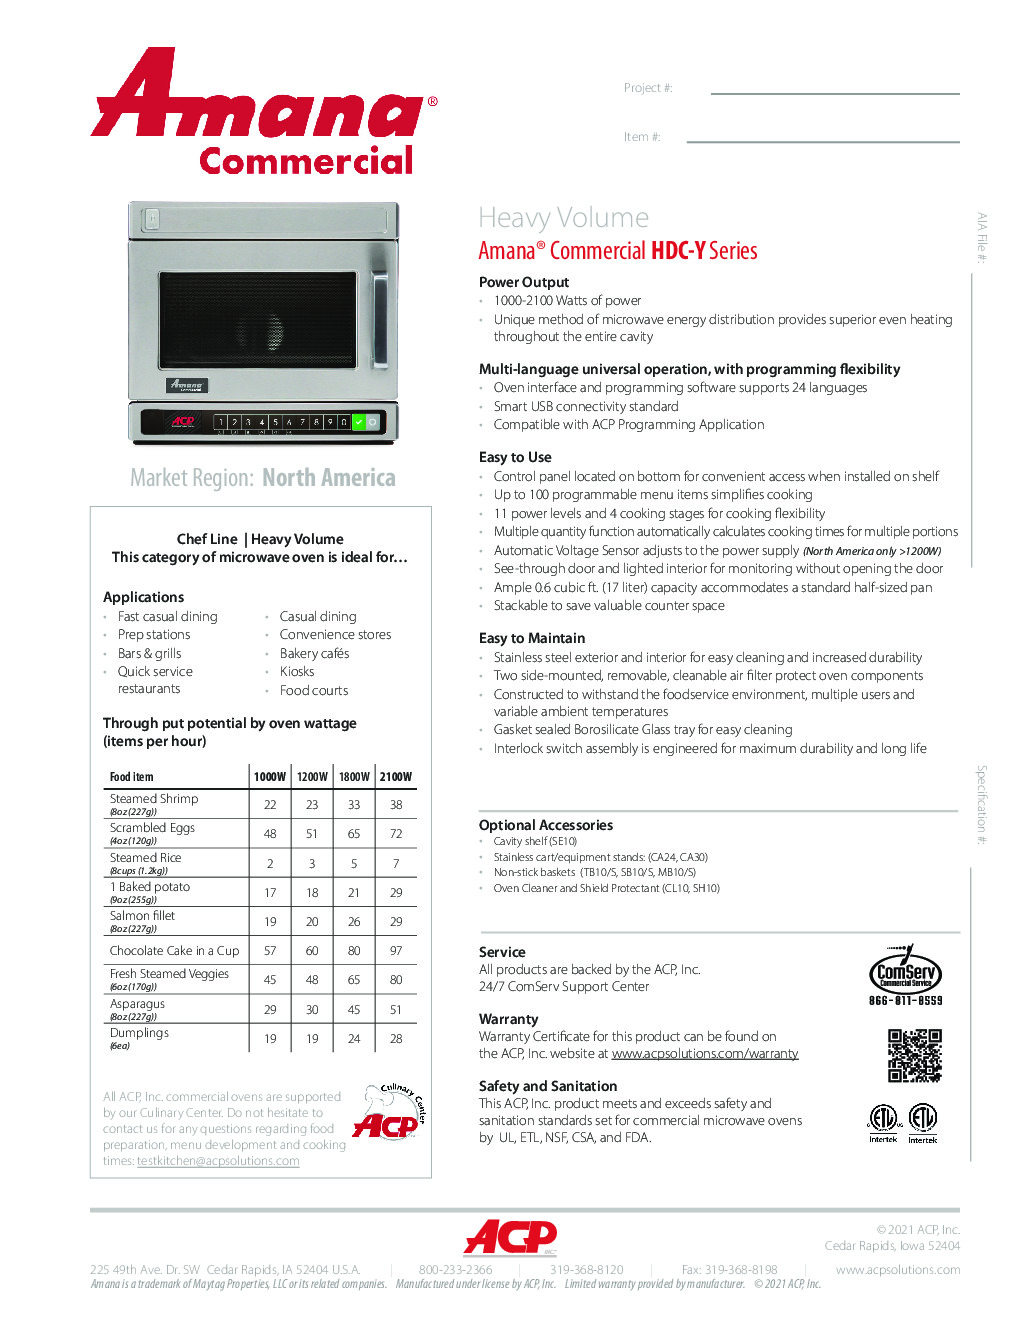 Amana HDC18Y2 Microwave Oven